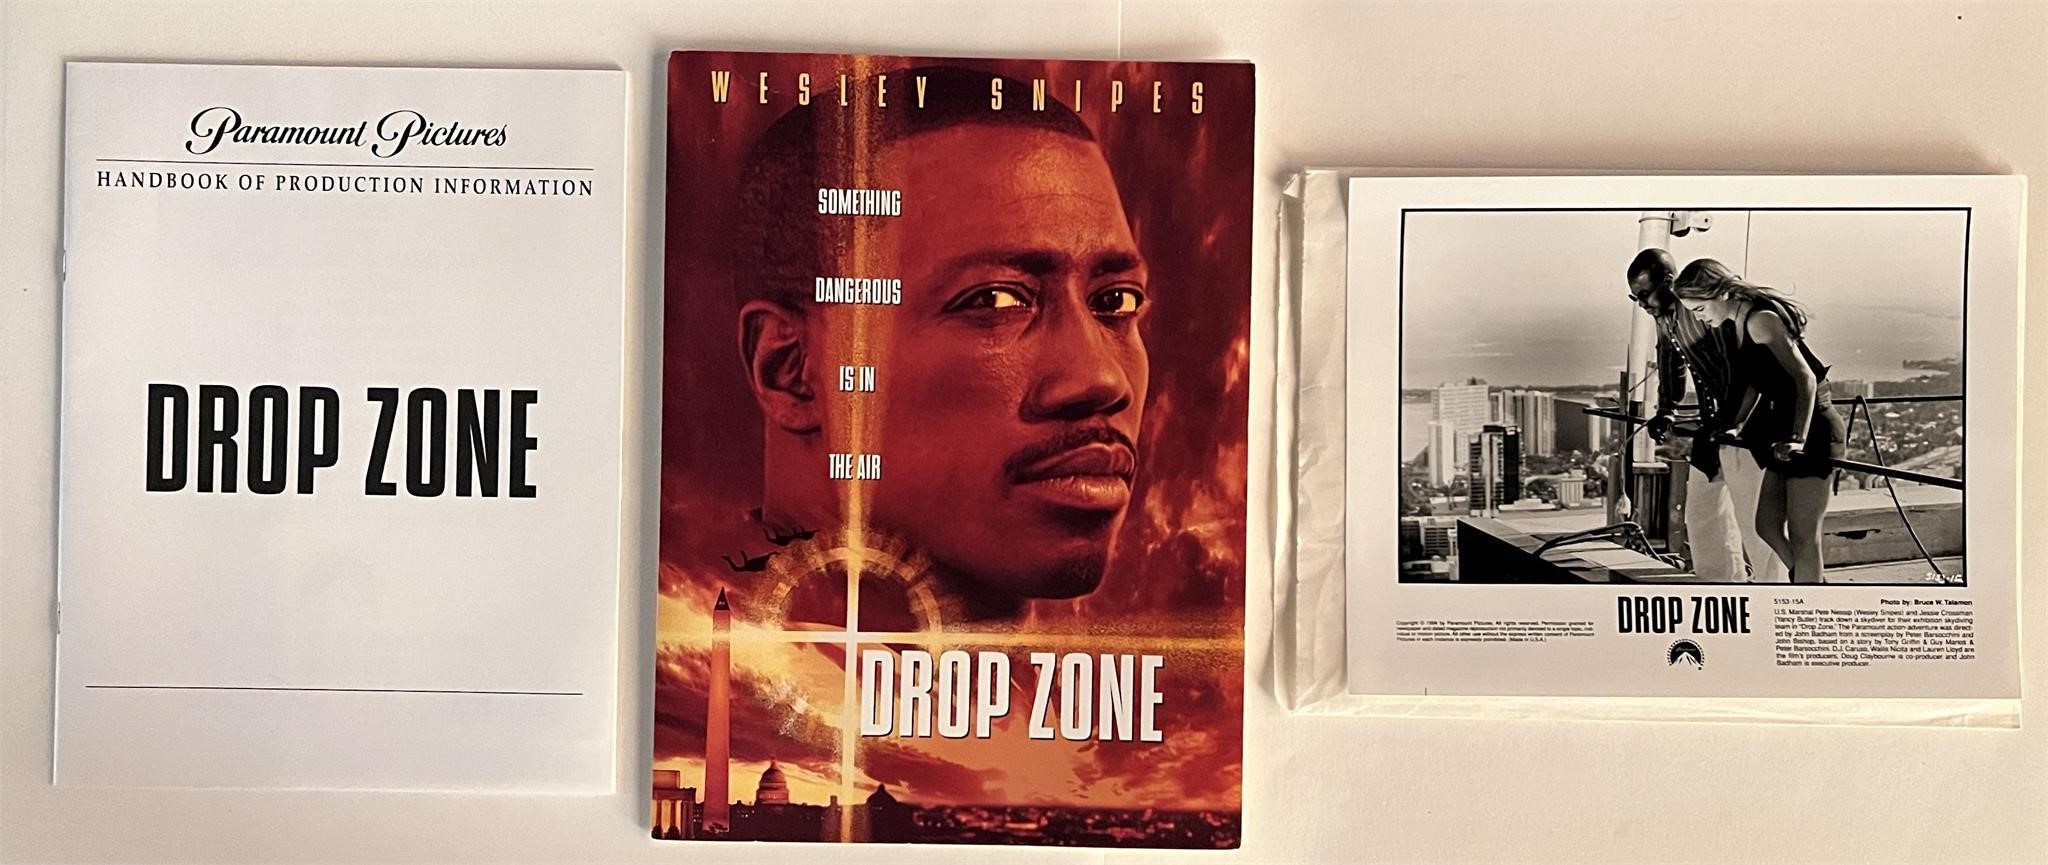 Drop Zone press kit